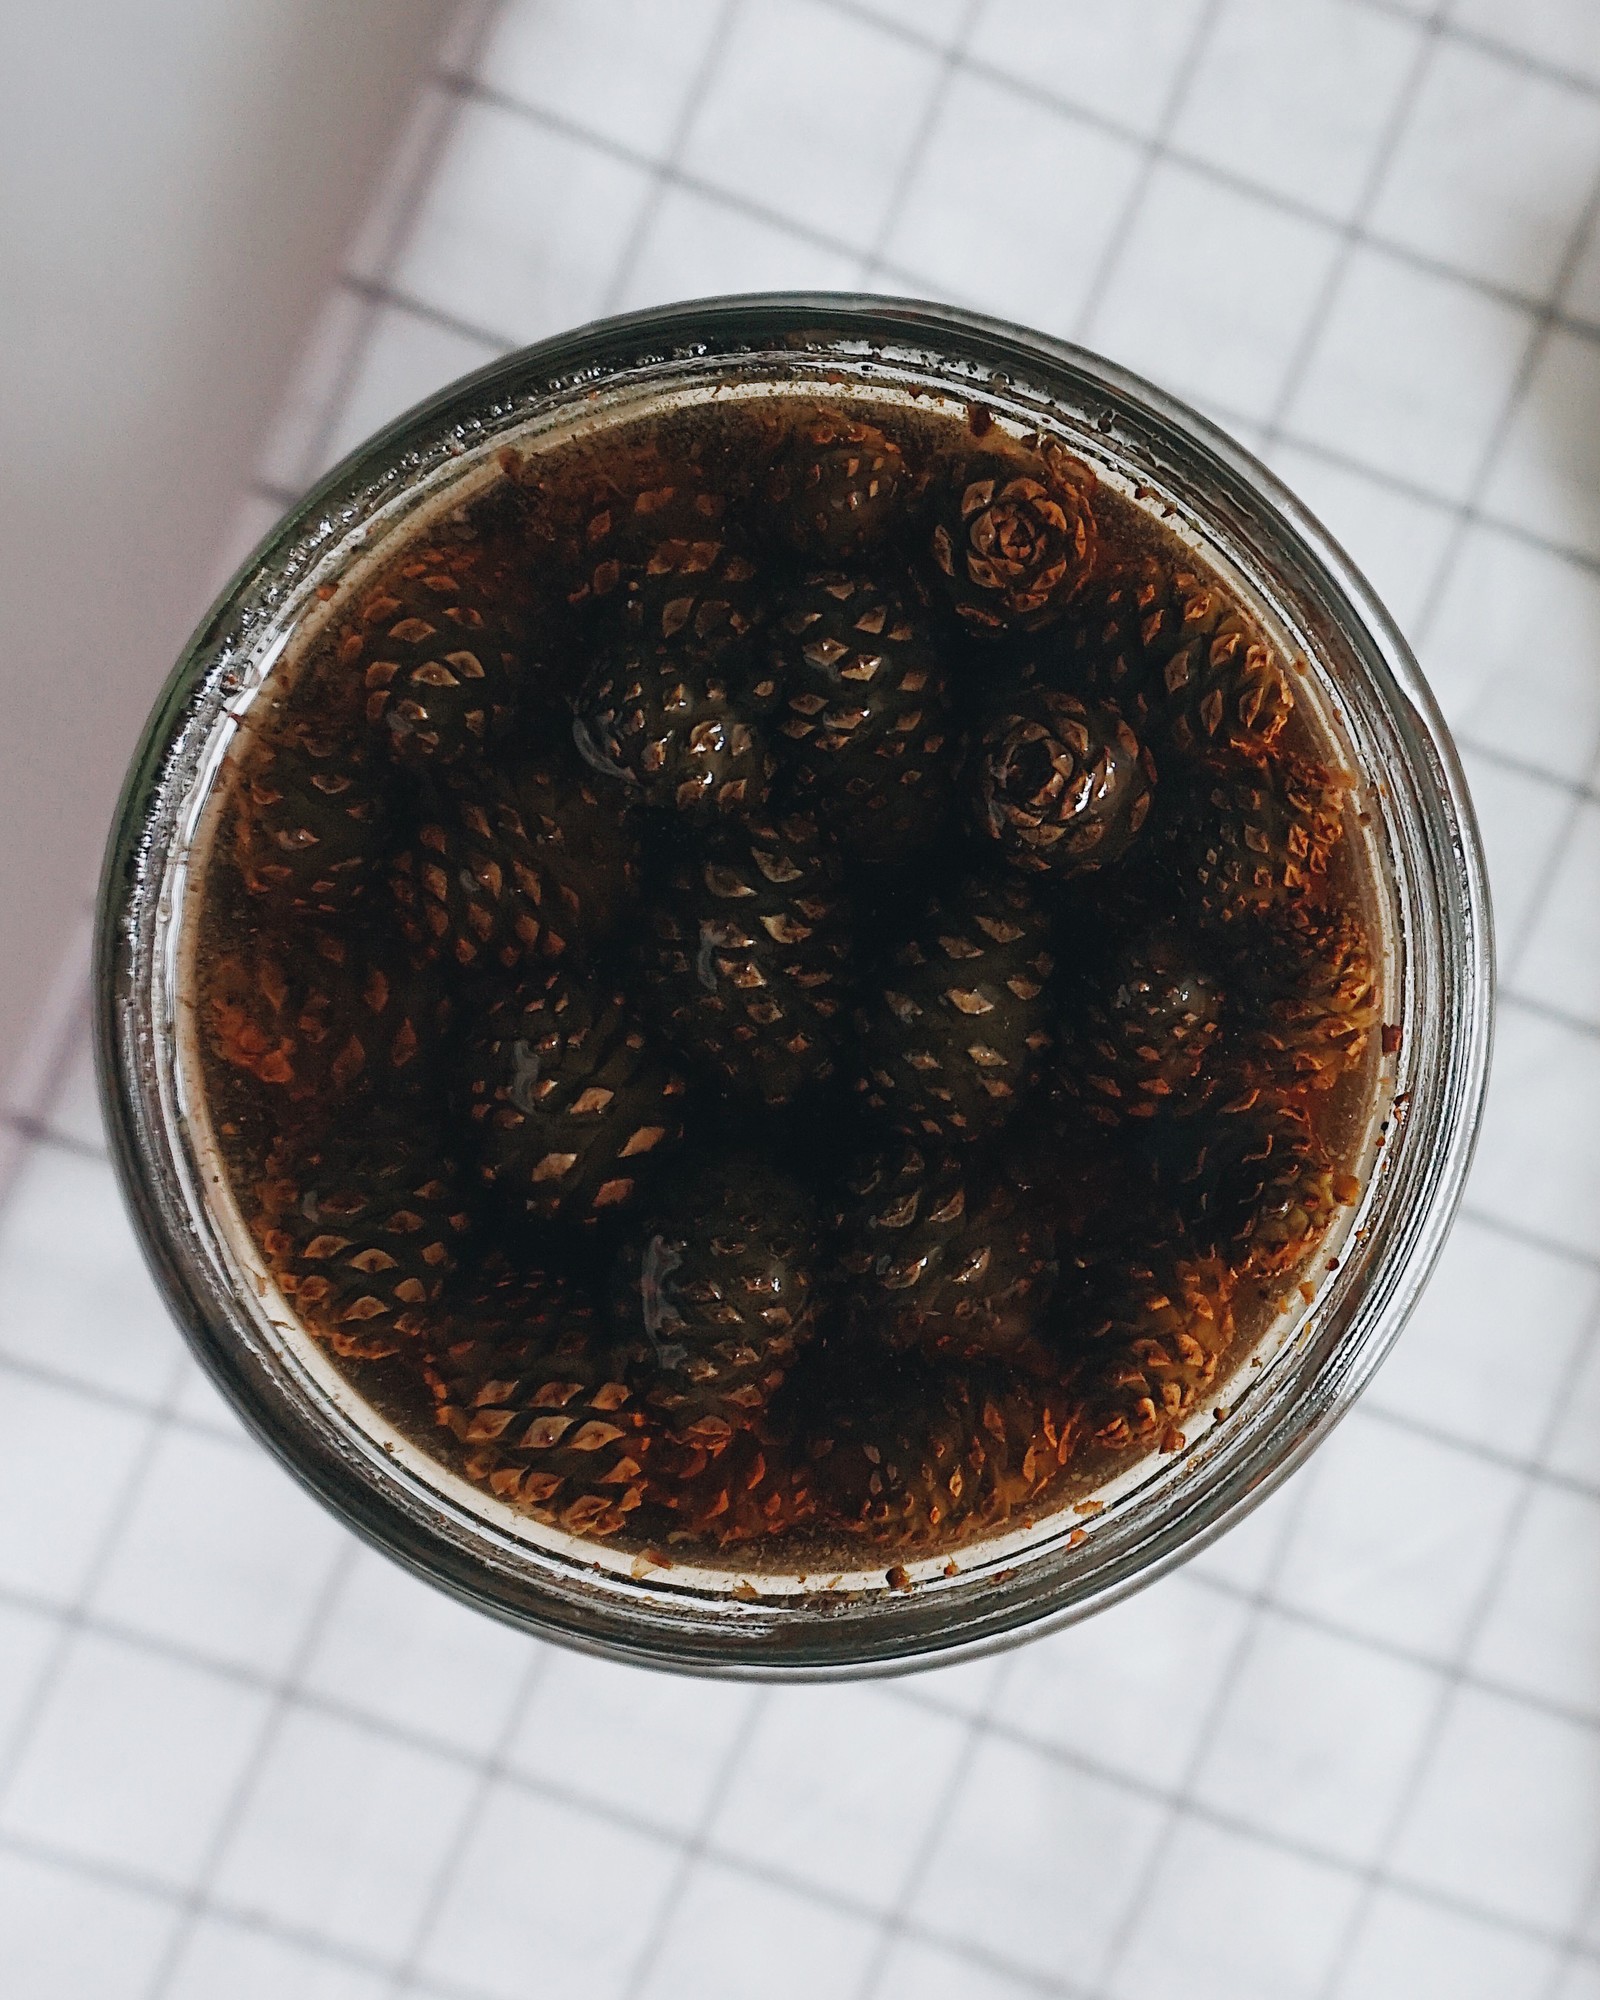 Natural pine cone jam from Ukraine